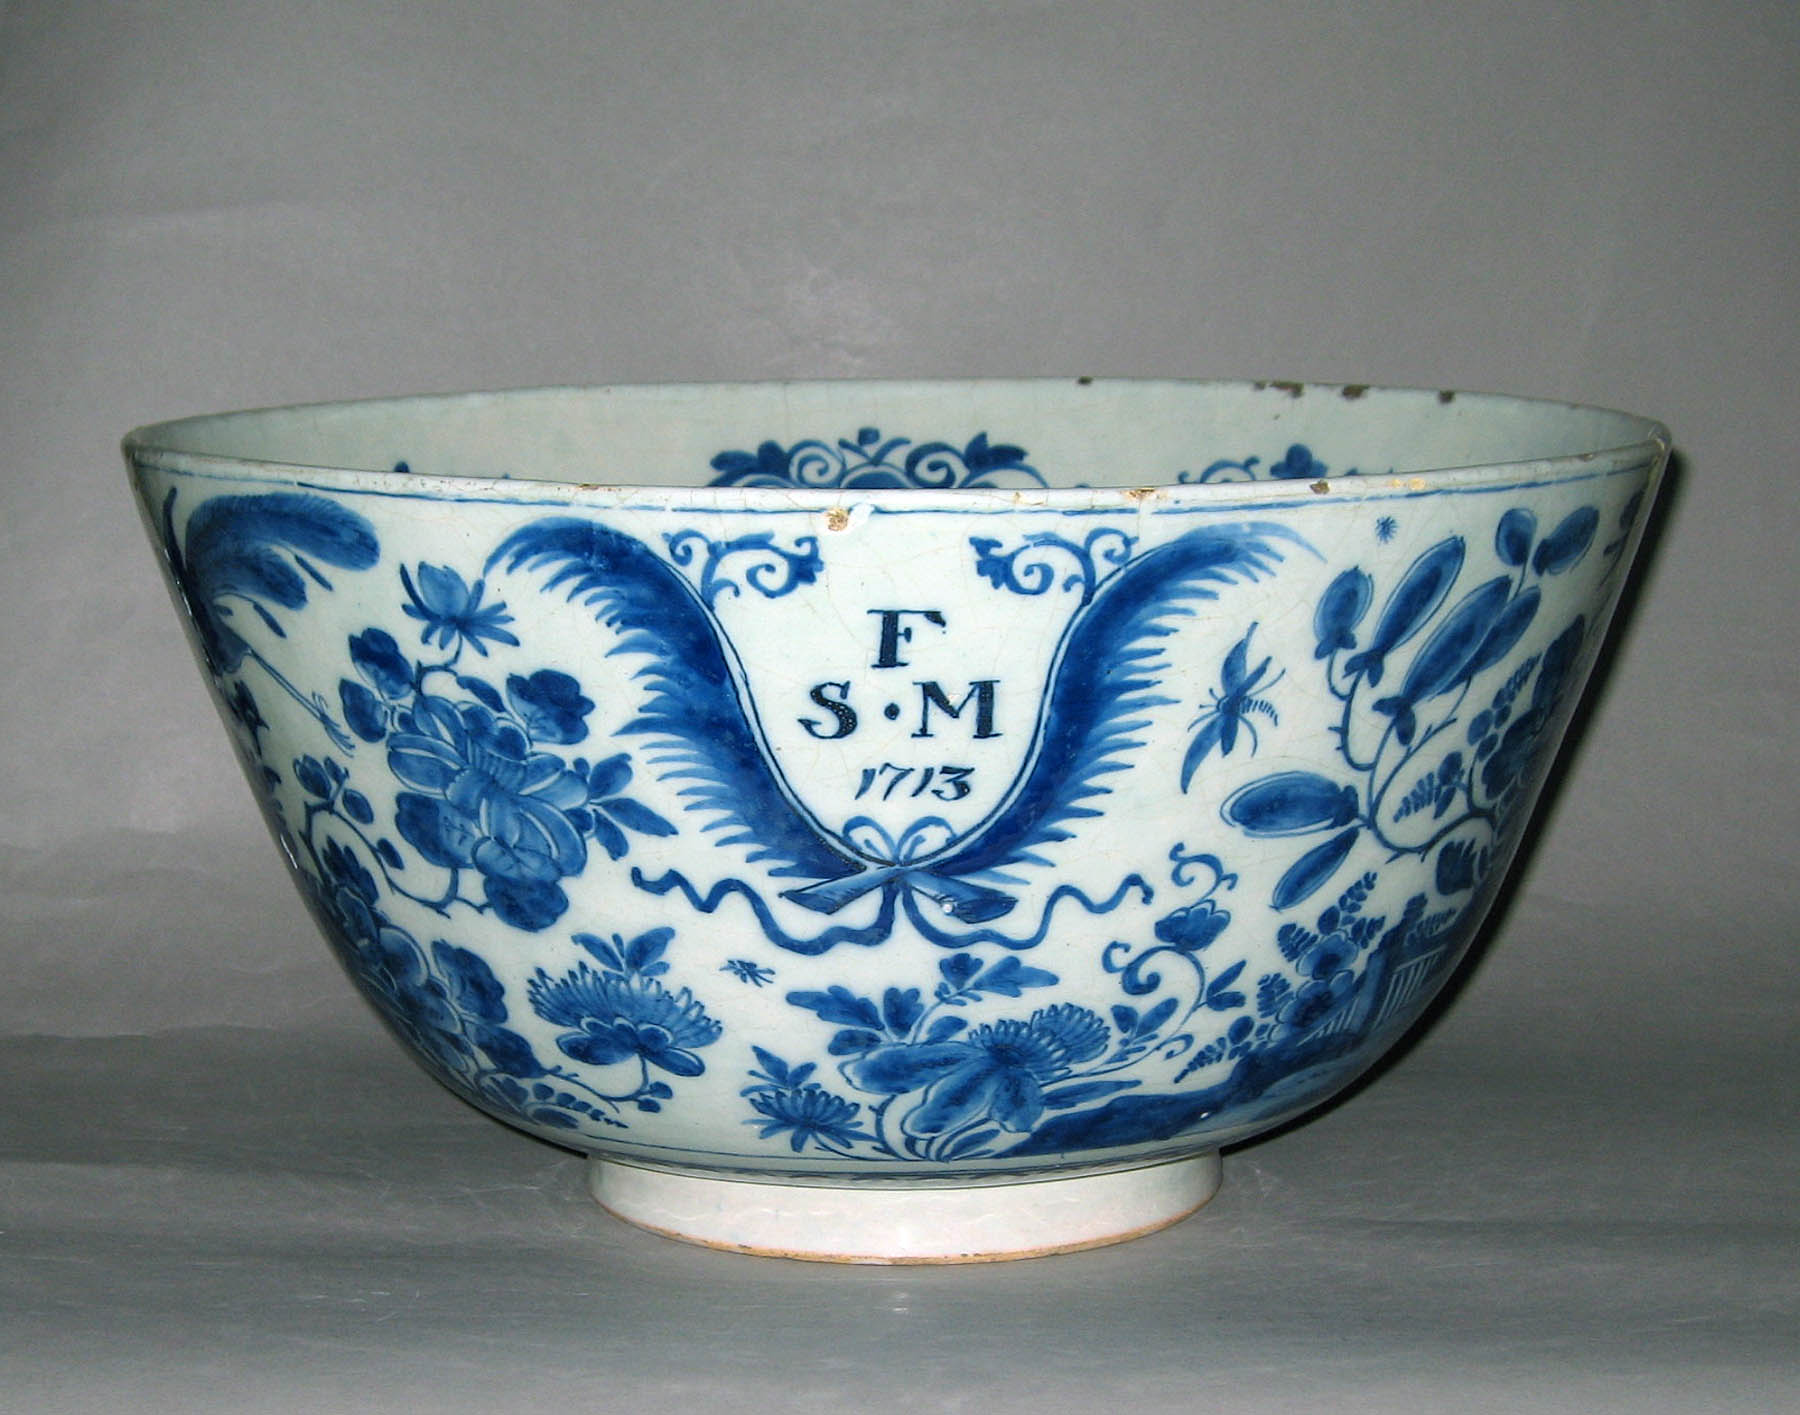 1955.0134 Delftware punch bowl